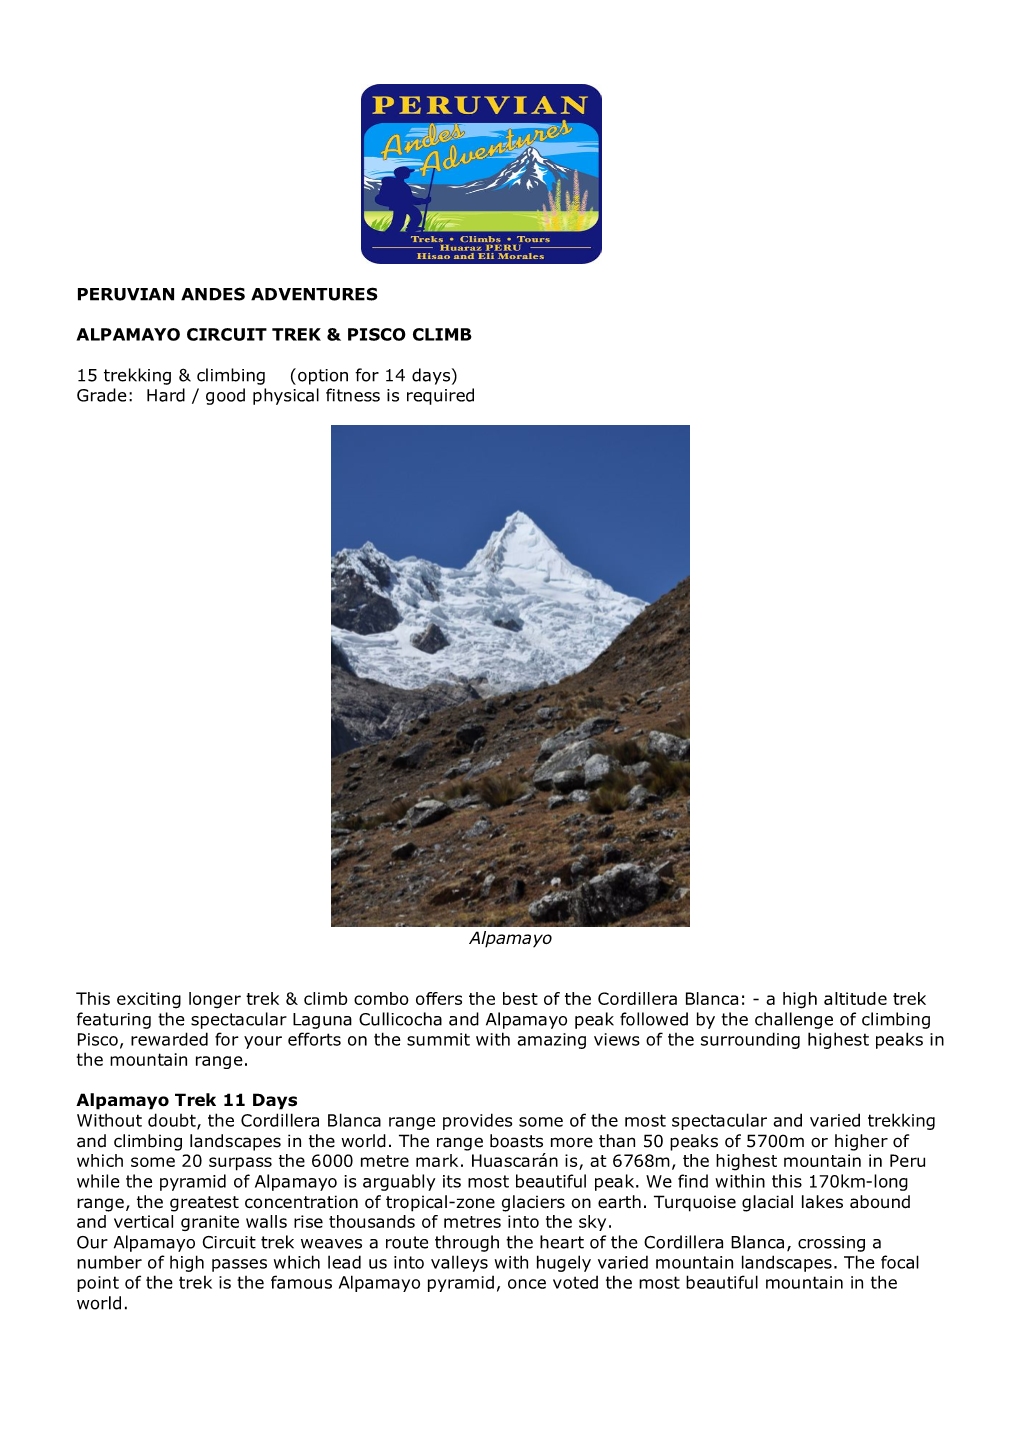 Peruvian Andes Adventures Alpamayo Circuit Trek